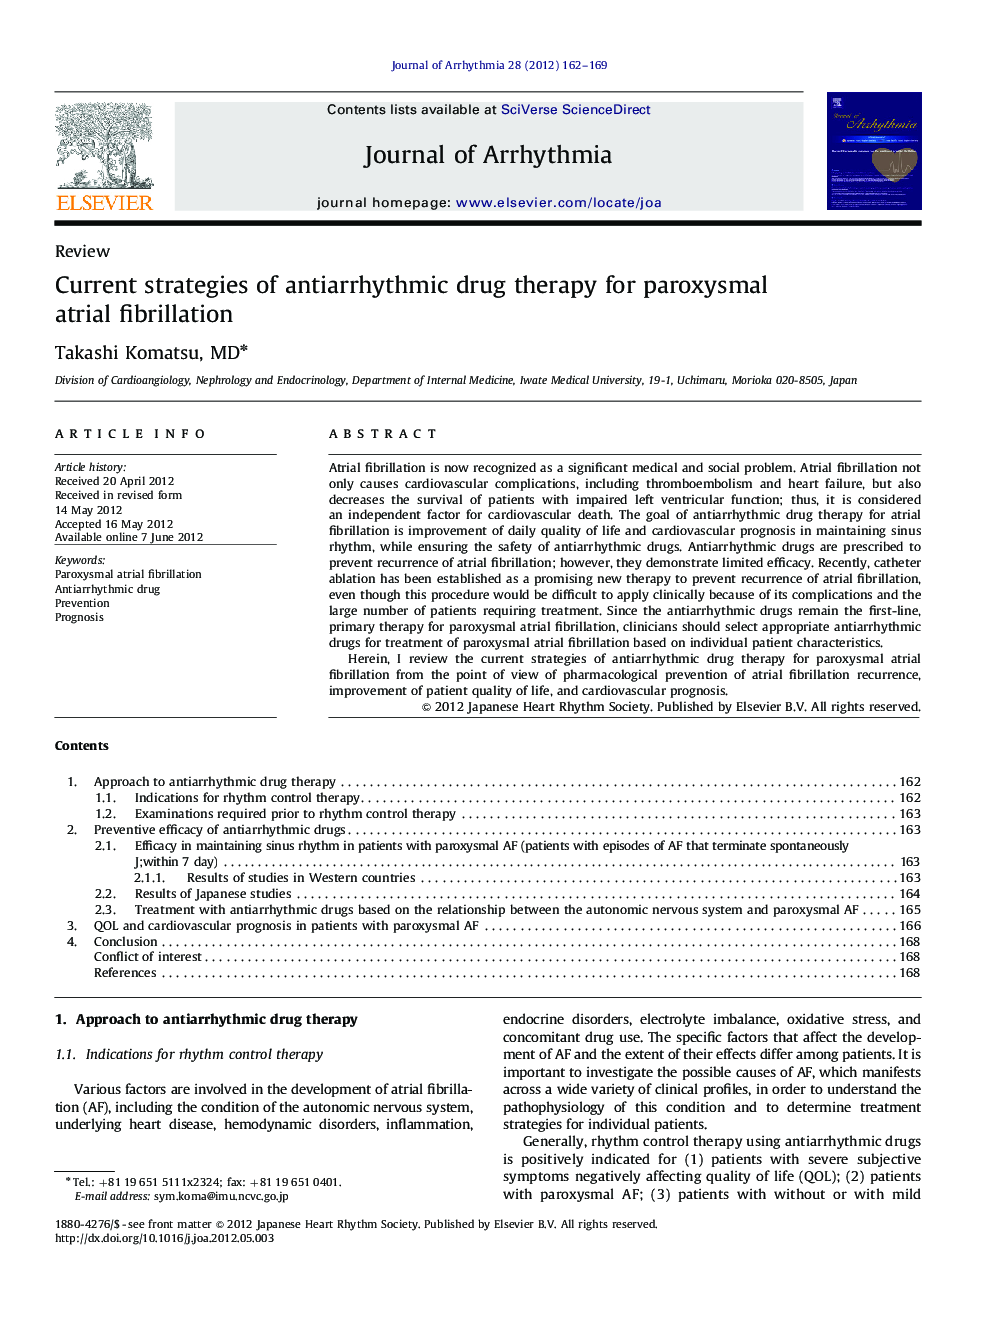 Current strategies of antiarrhythmic drug therapy for paroxysmal atrial fibrillation